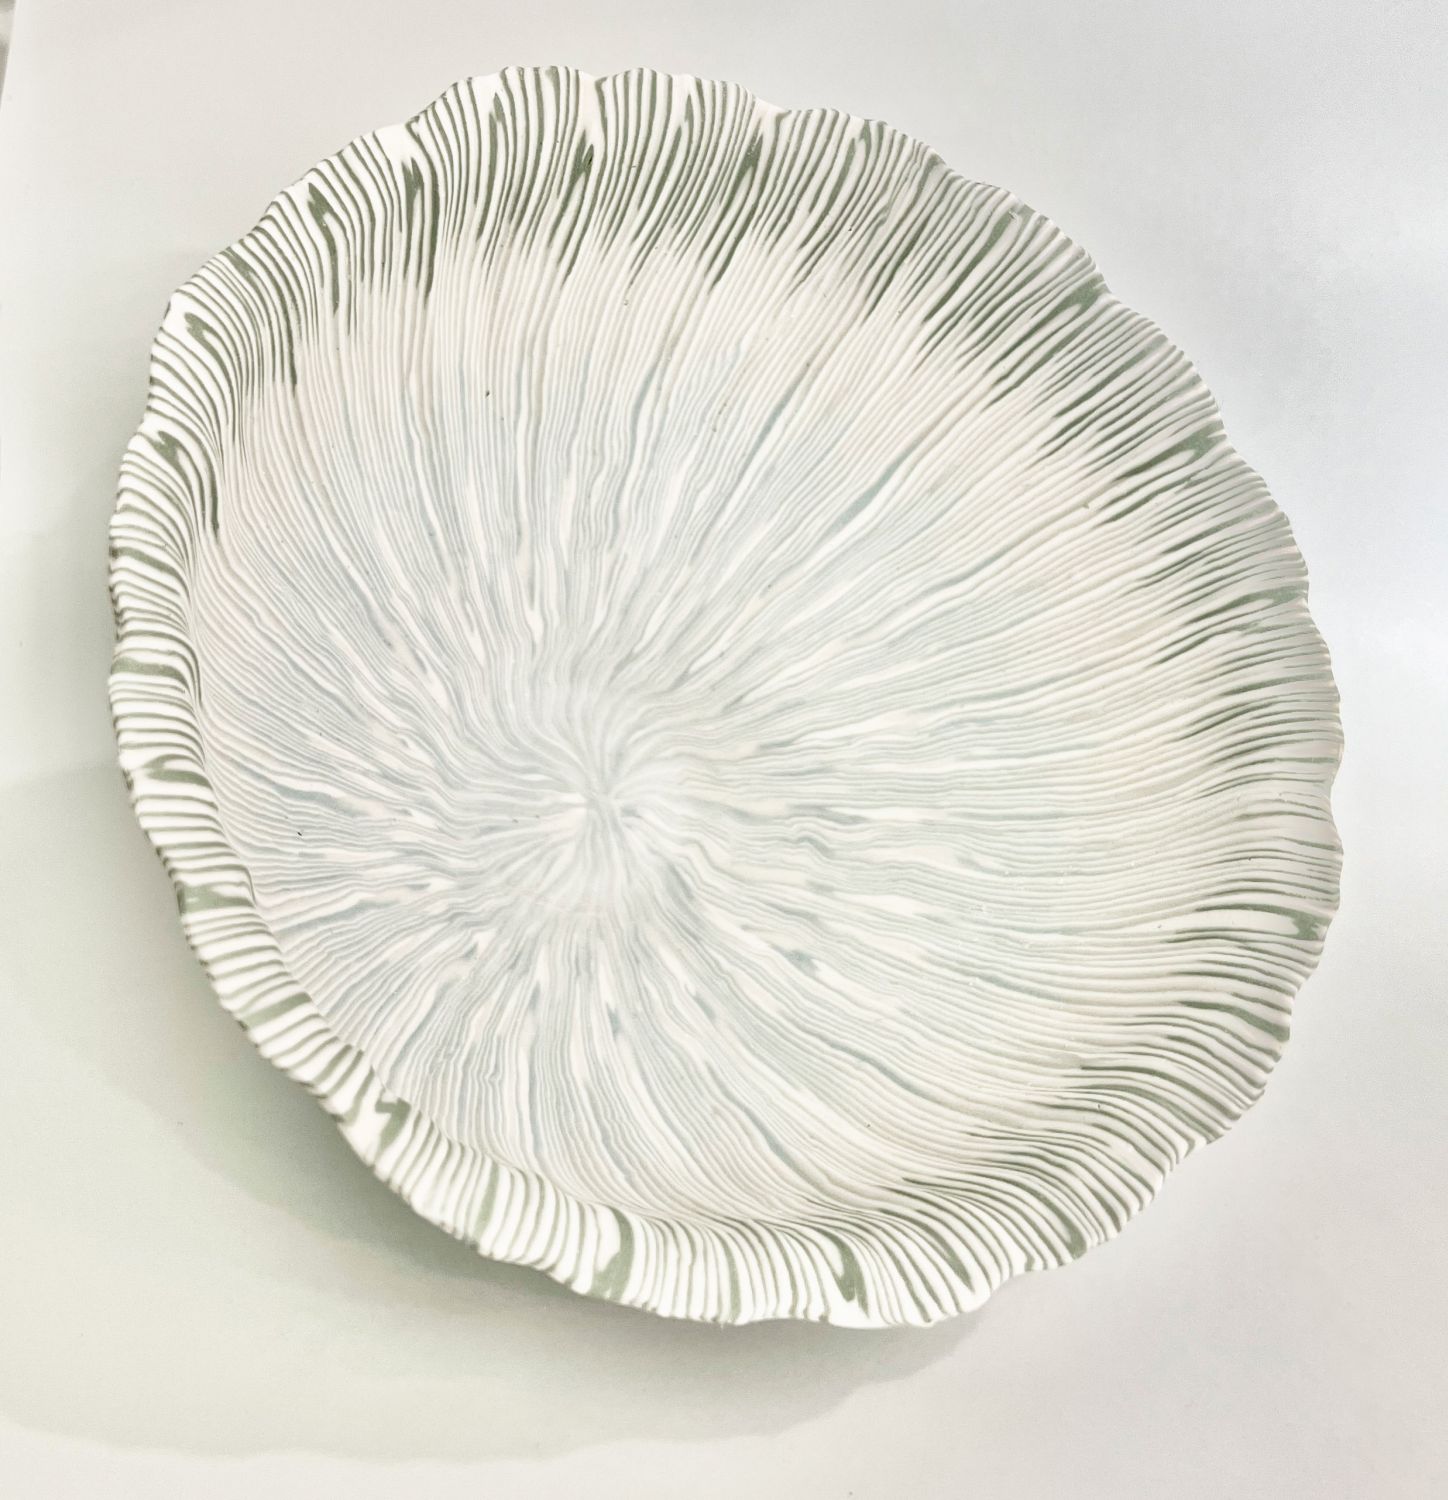 Eiko Maeda: Green and White Bowl Product Image 3 of 3